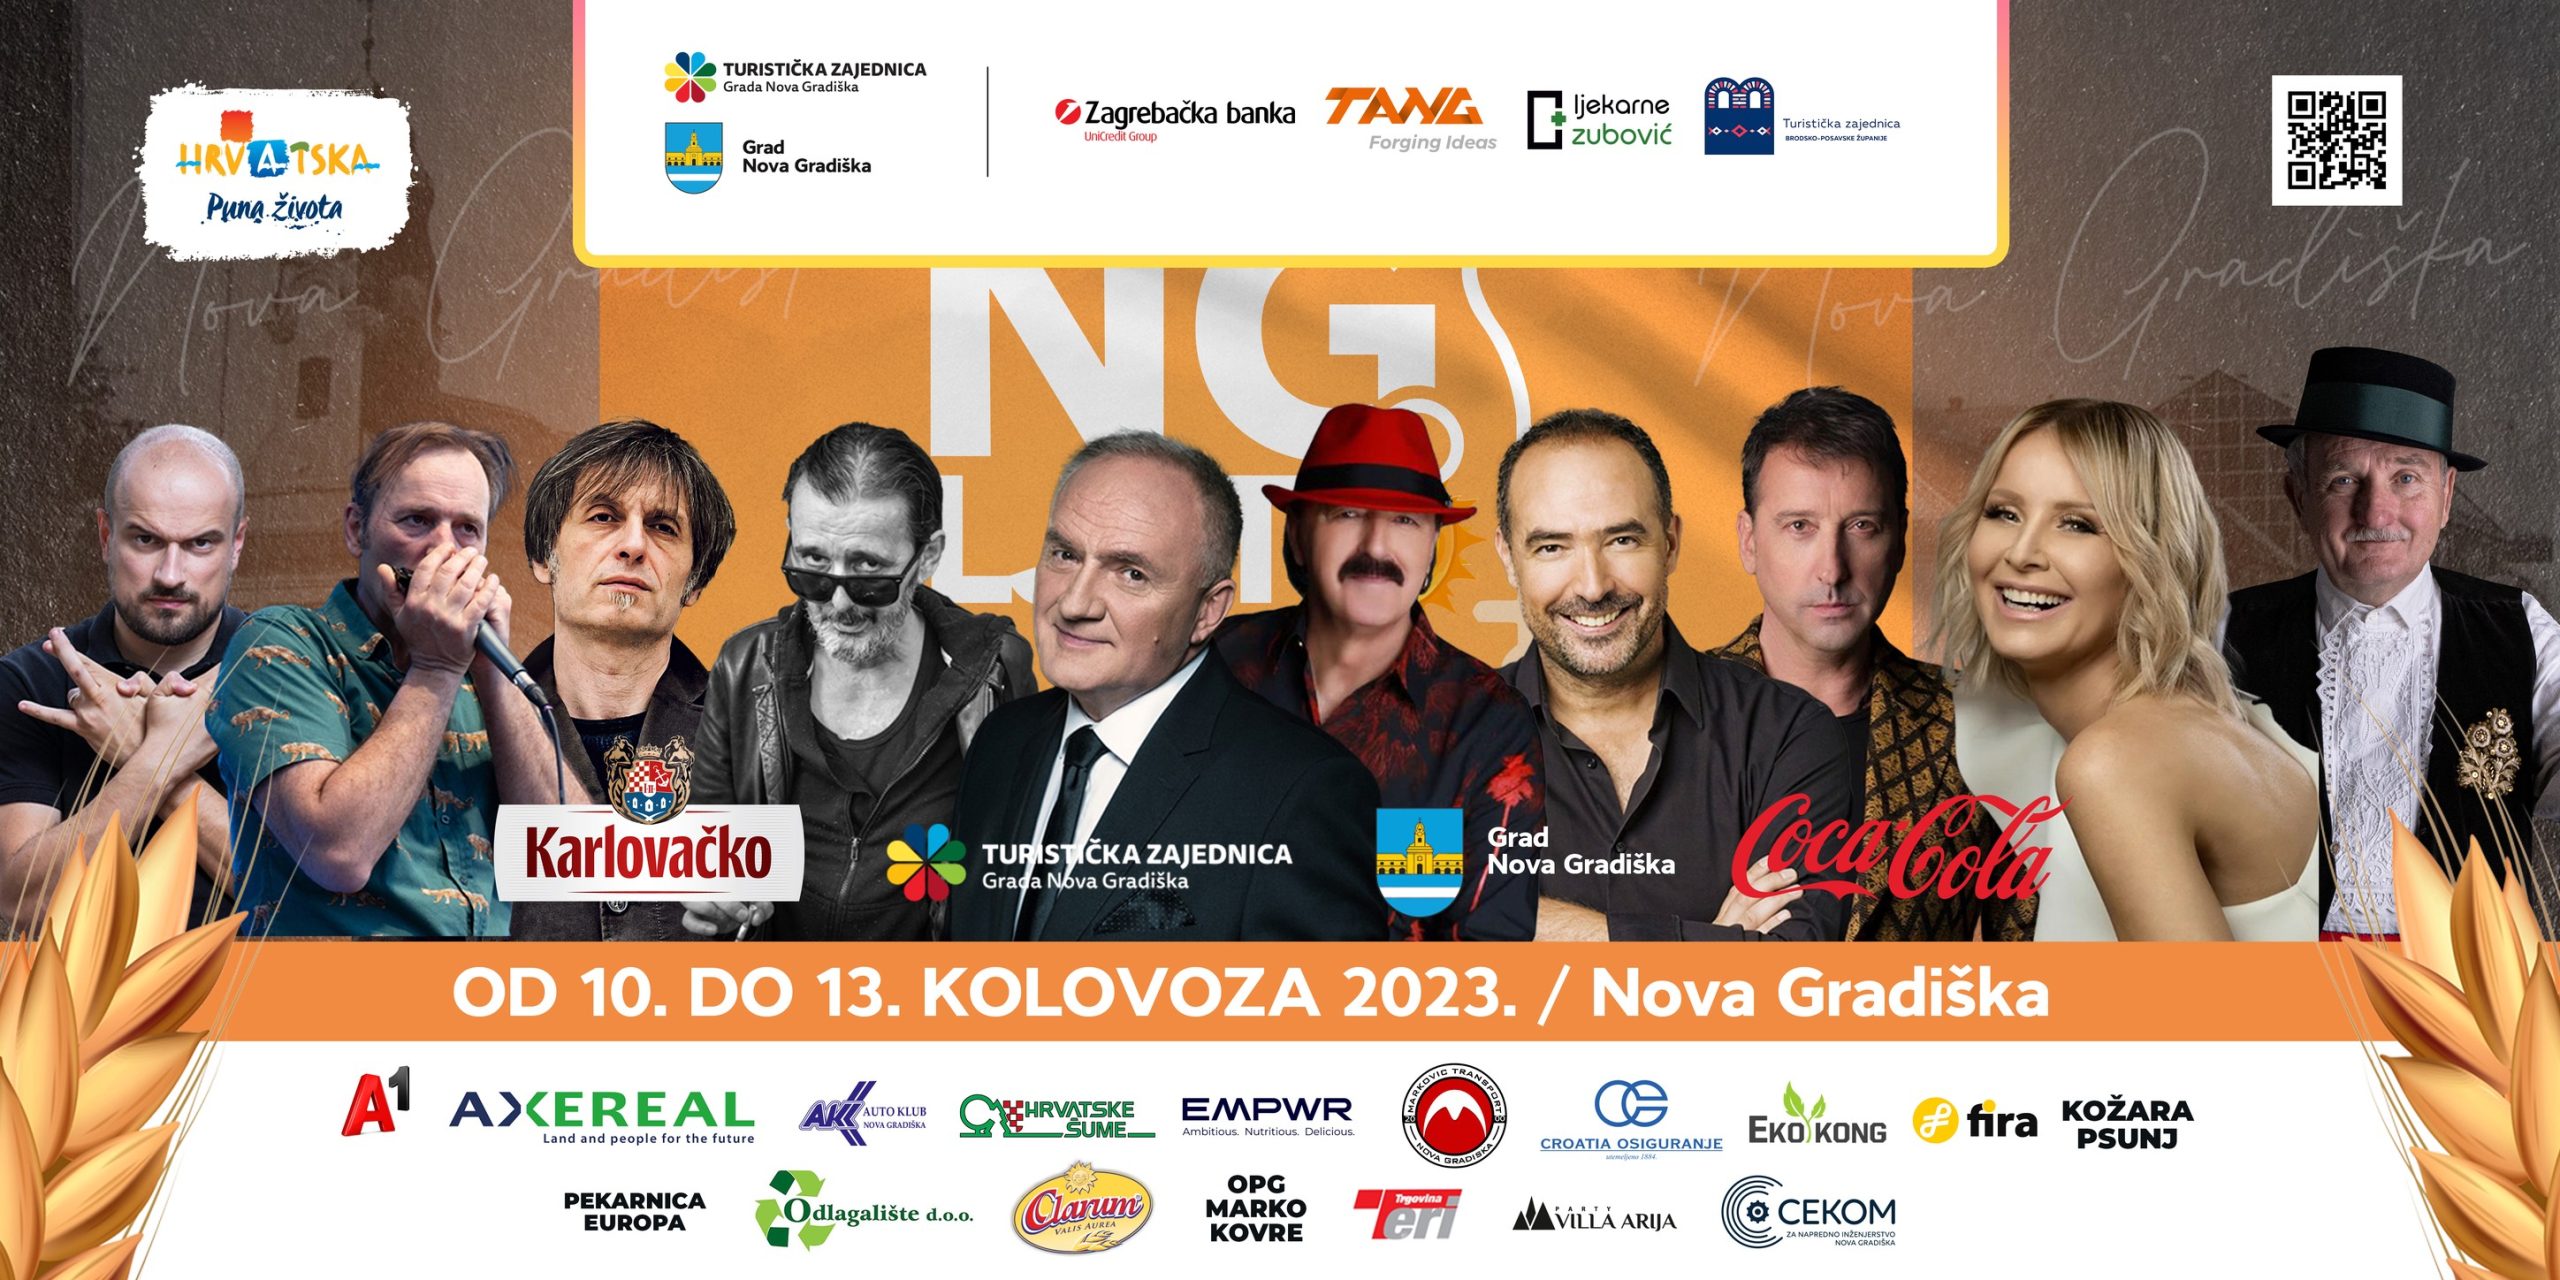 Novogradiško glazbeno ljeto 2023